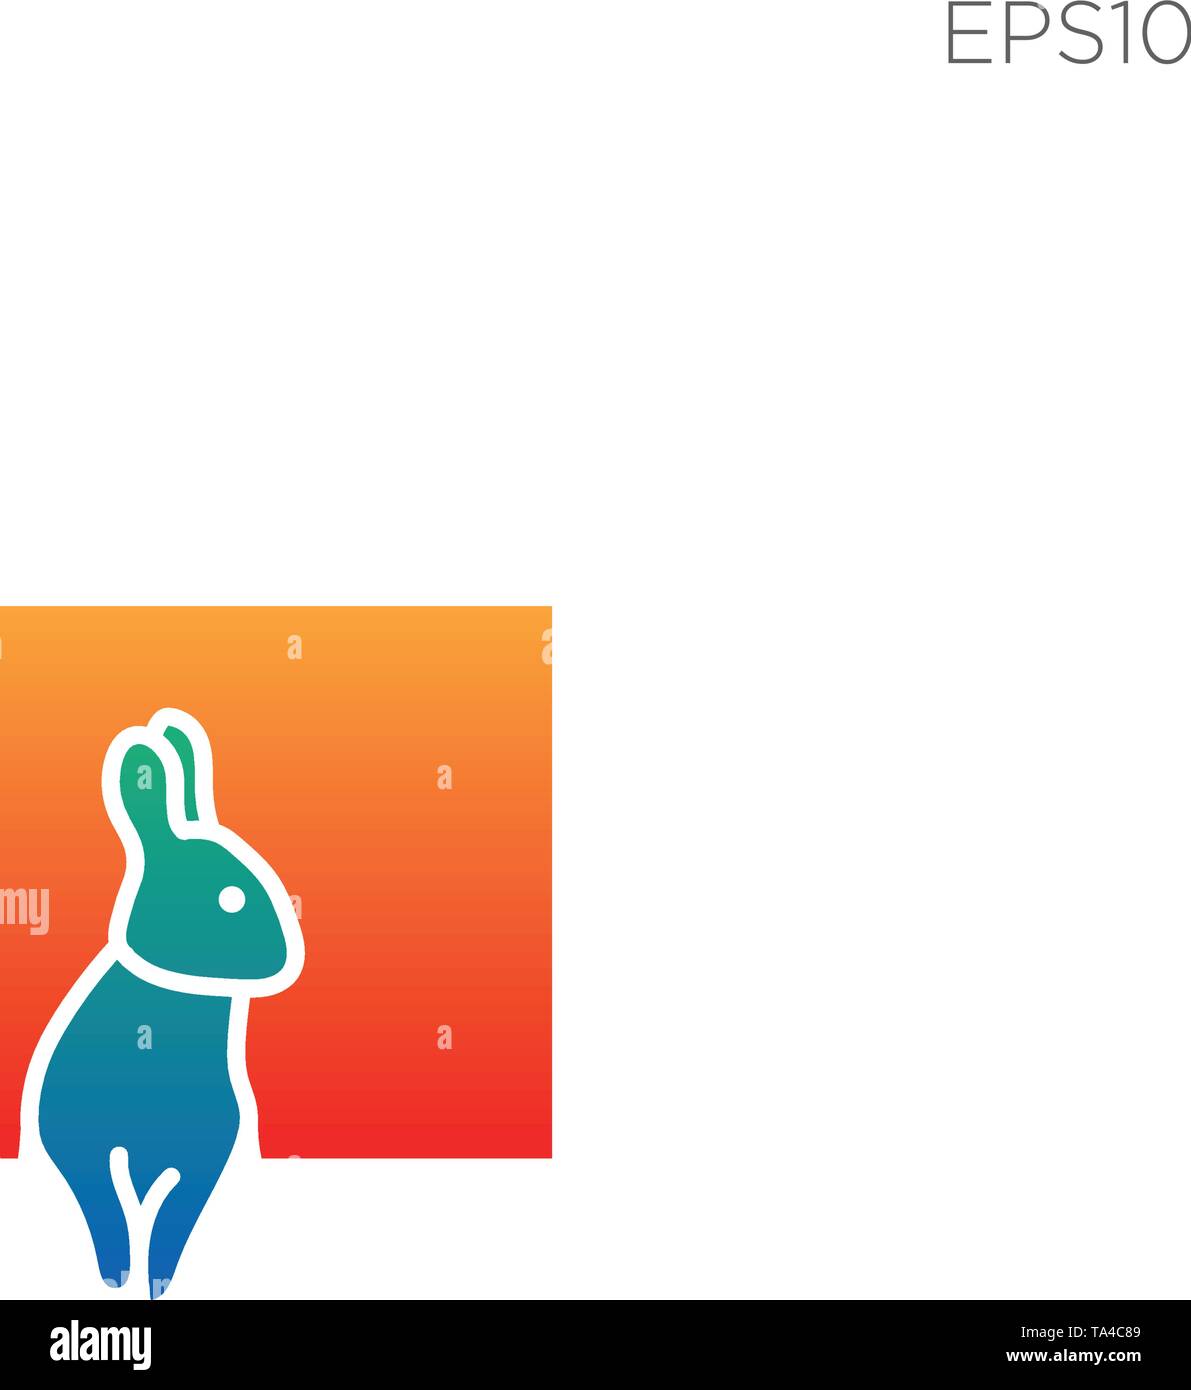 rabbit bunny logo or symbol vector illustration - vector Stock Vector